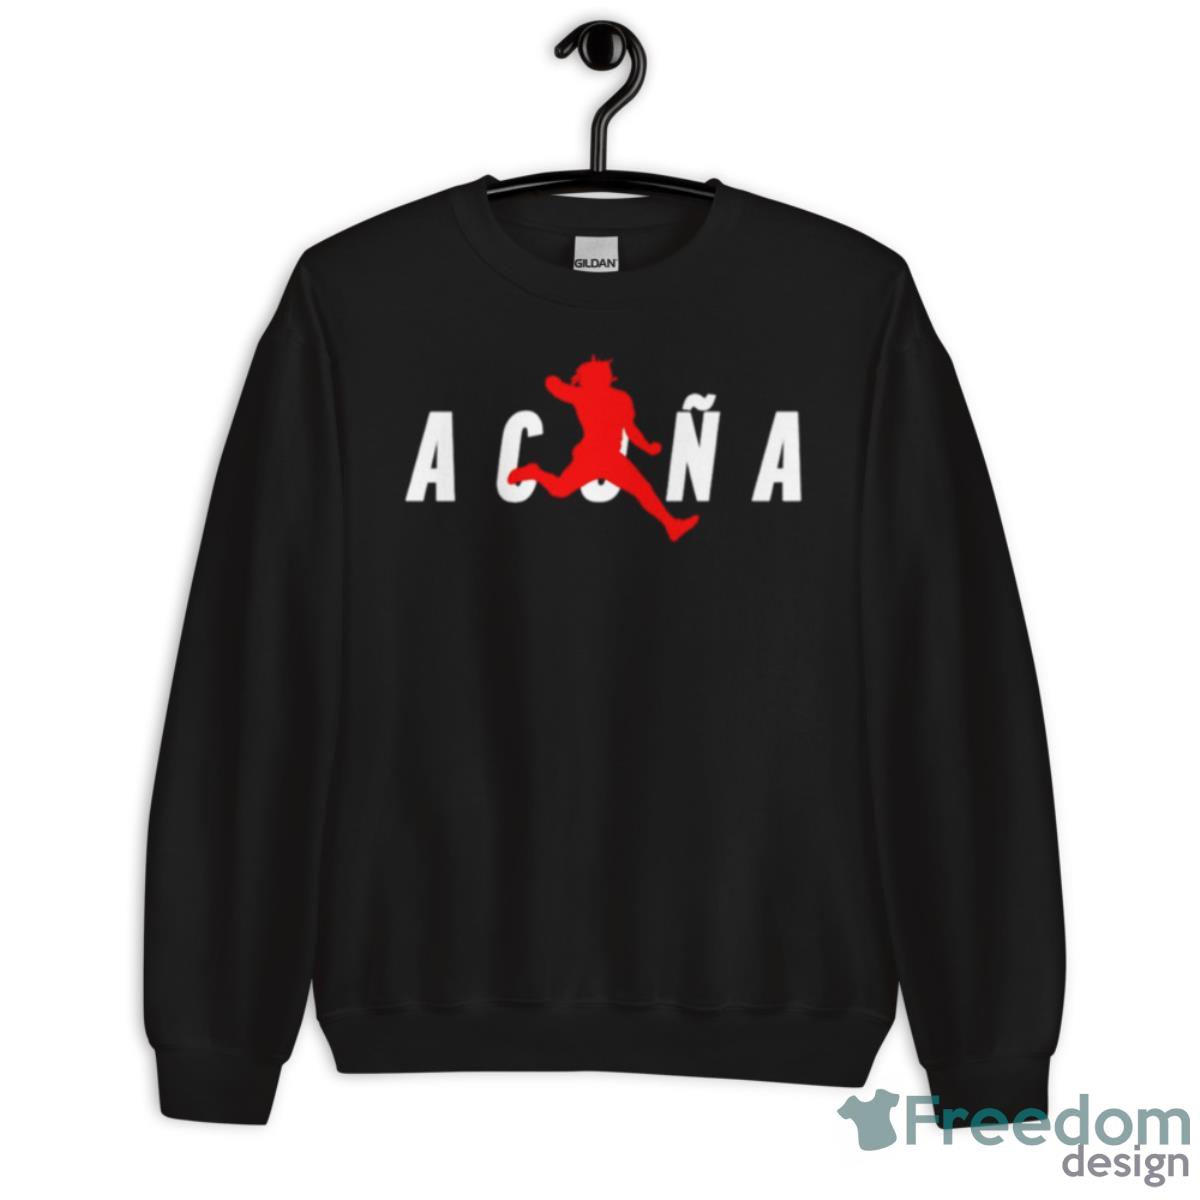 Acuna Ronald Acuña Jr Atlanta Braves Shirt - Freedomdesign